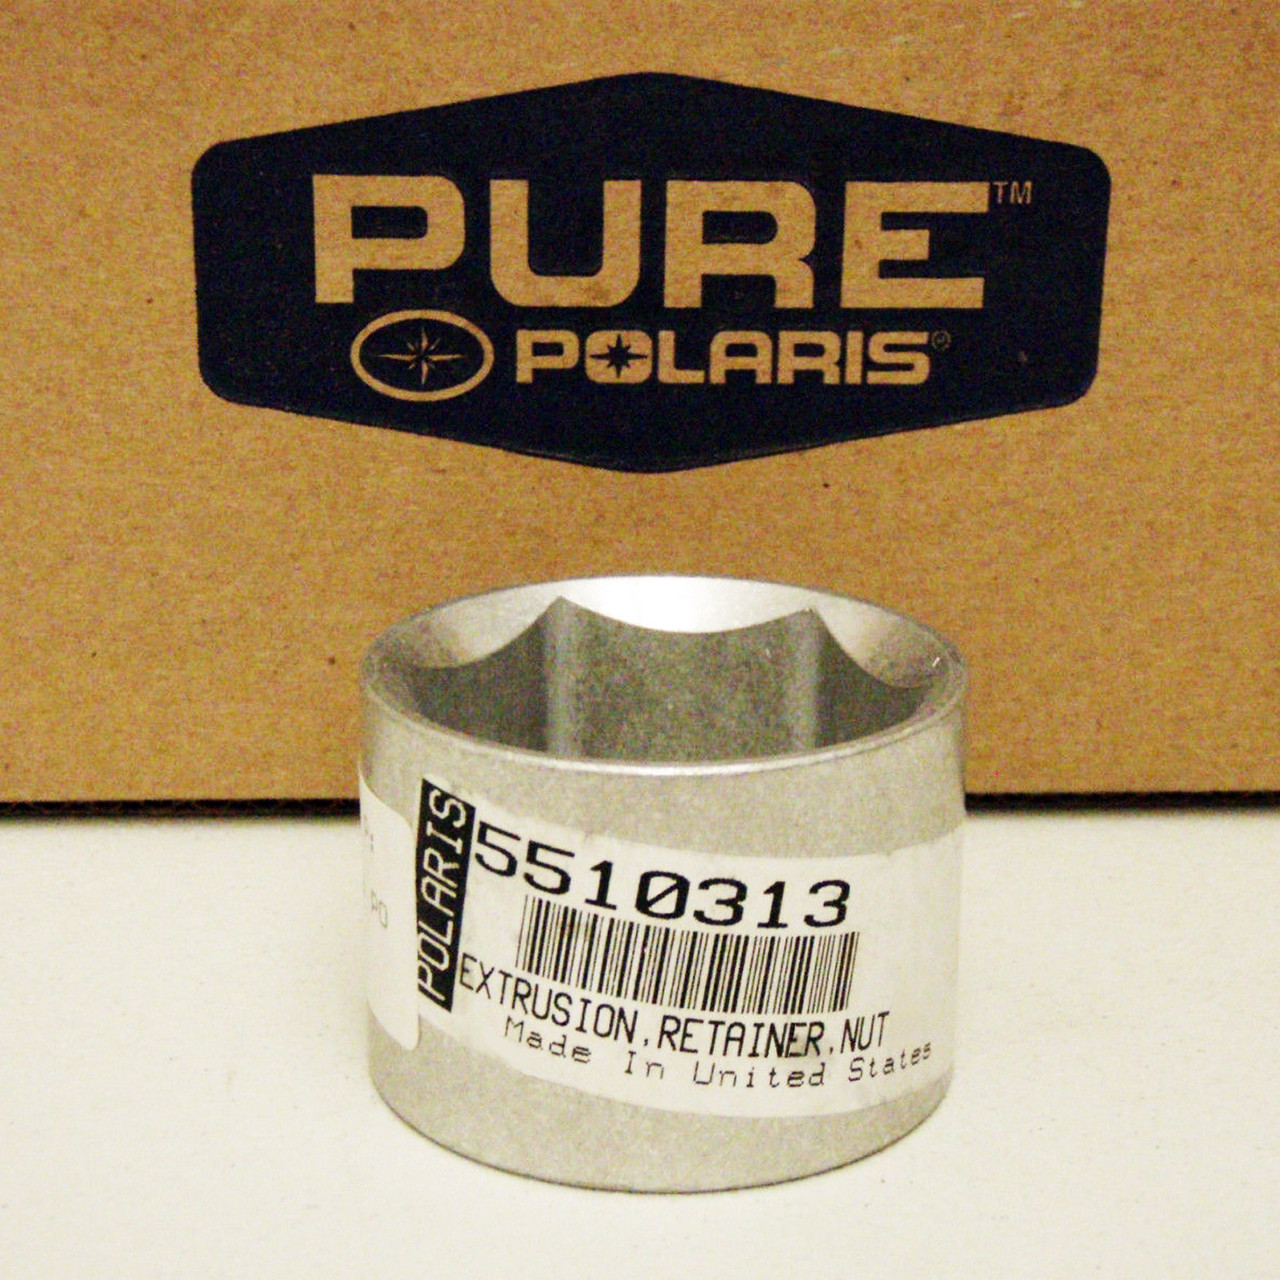 Polaris New Extrusion Retainer Nut Rear Axle Housing Scrambler,Trail,Blazer,Boss